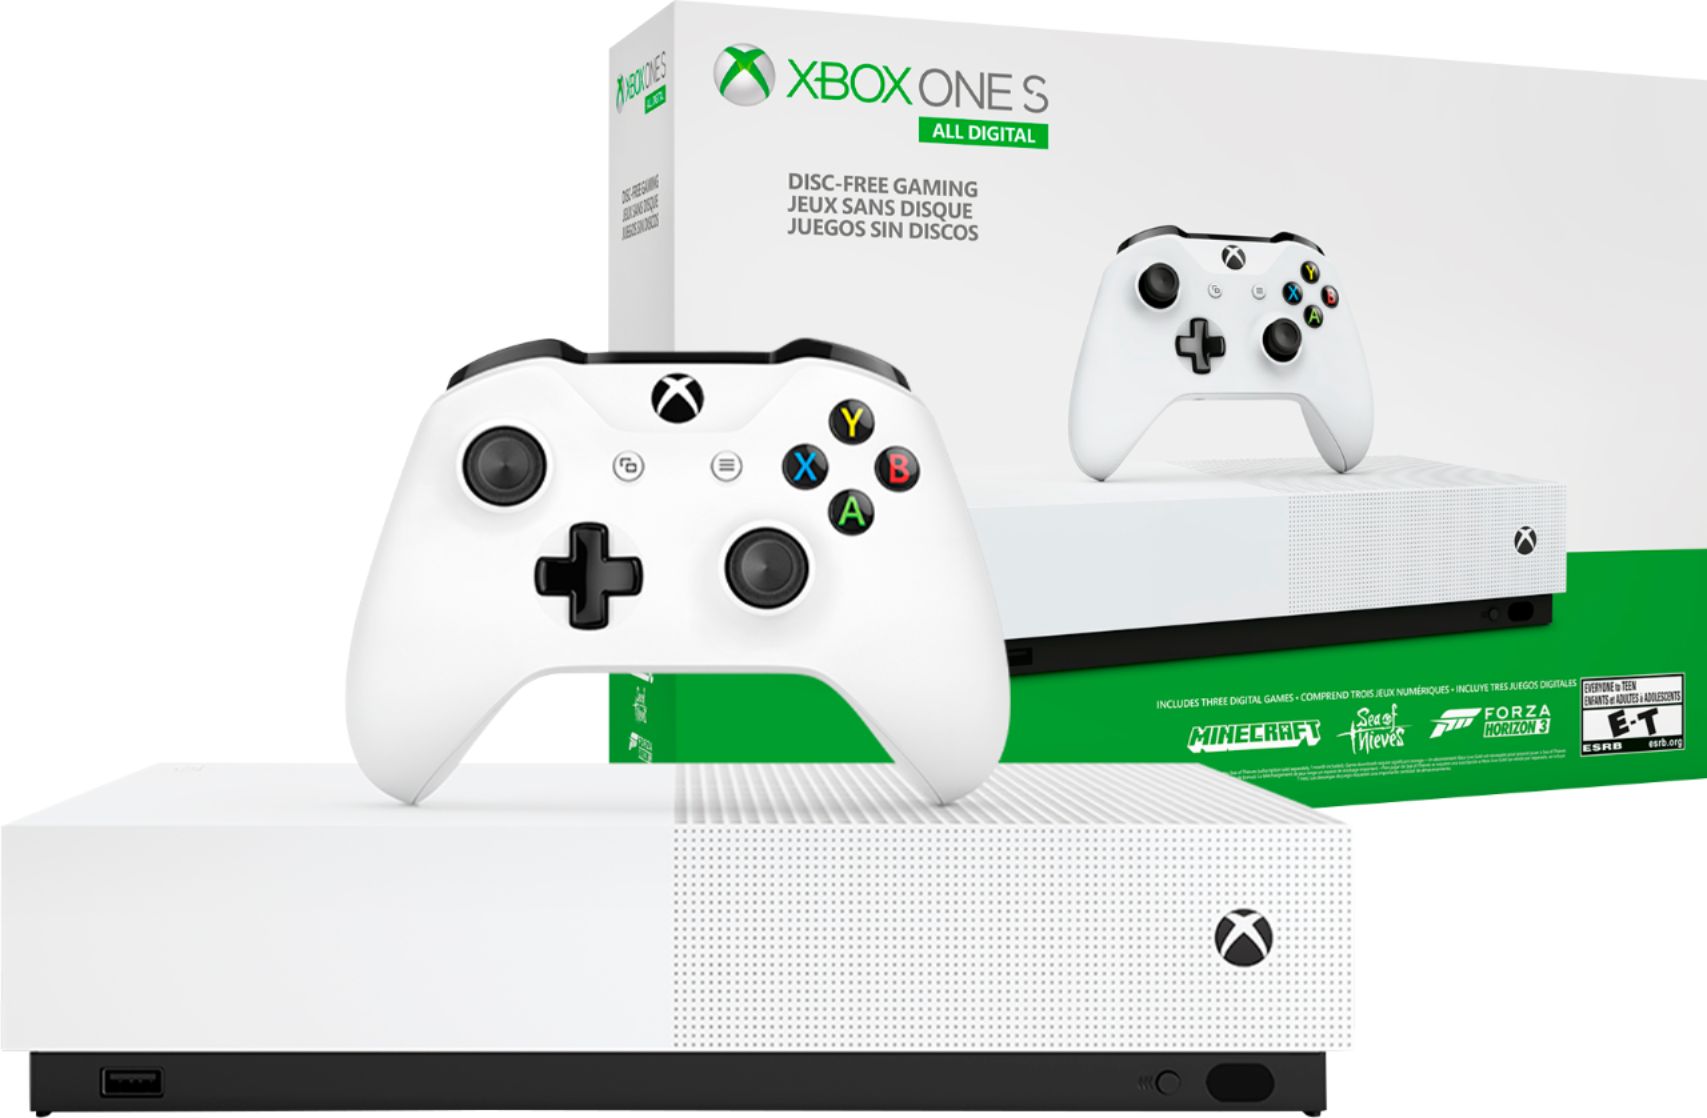 Oeganda klem 鍔 Microsoft Xbox One S 1TB All-Digital Edition Console (Disc-free Gaming)  NJP-00024 - Best Buy